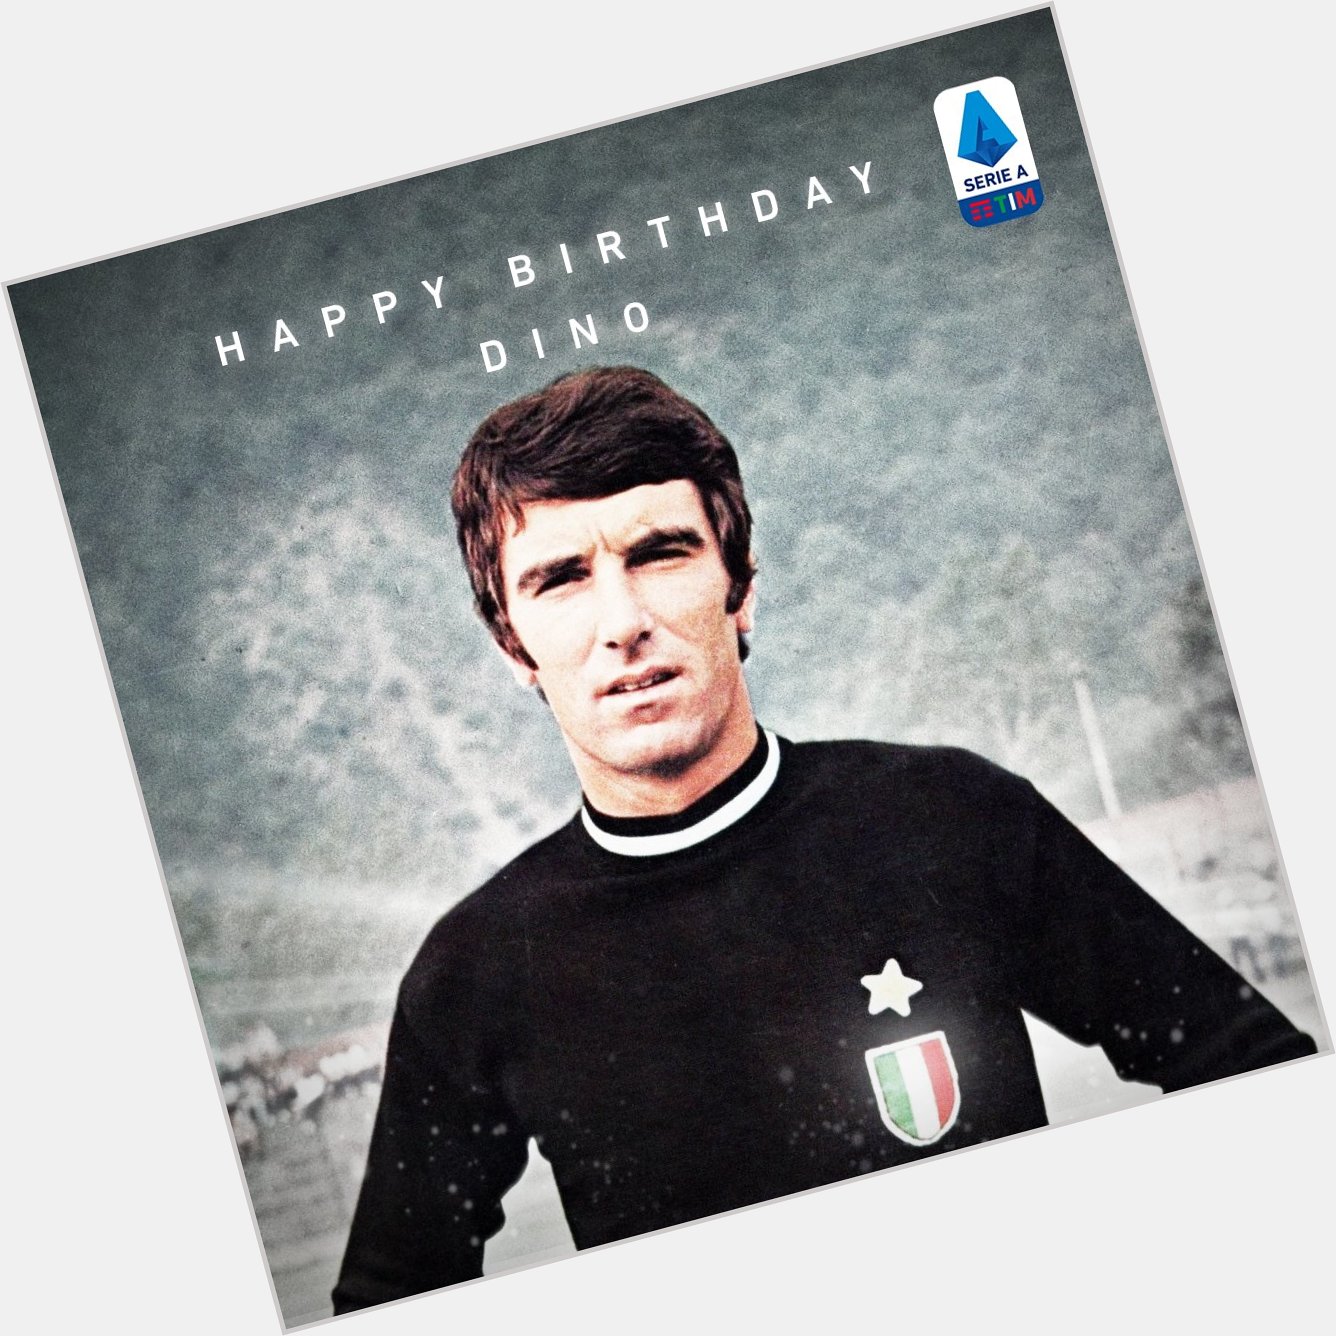 His saves wrote history.  Happy birthday, Dino Zoff.   